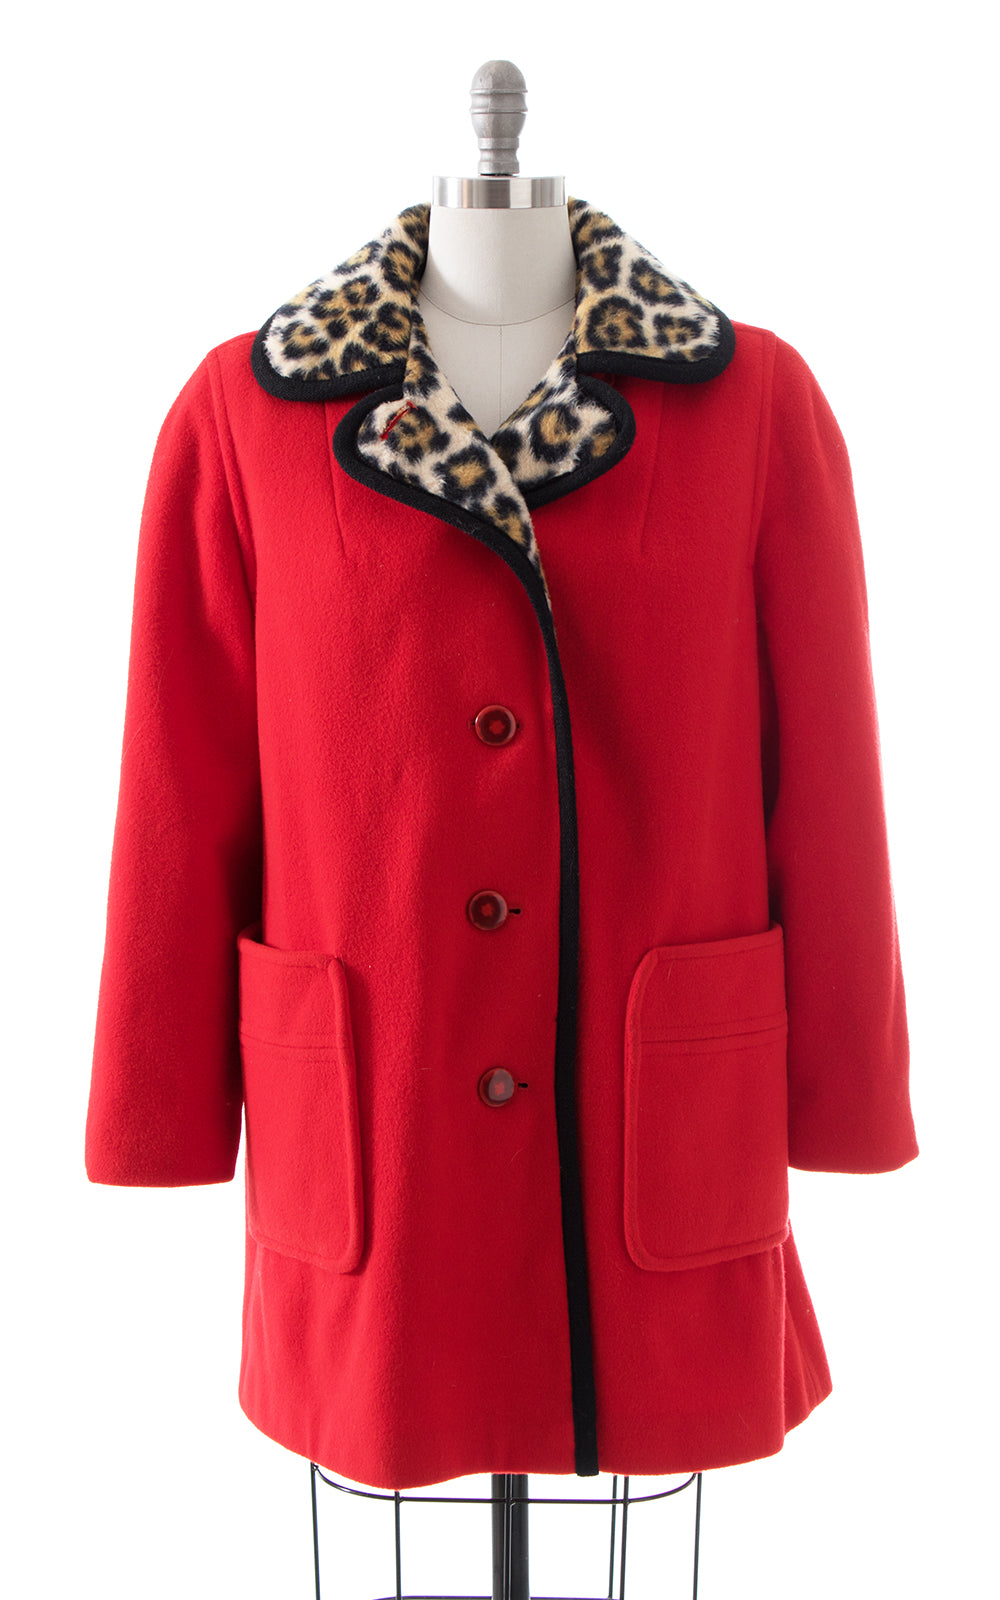 1970s Red Wool & Leopard Print Coat